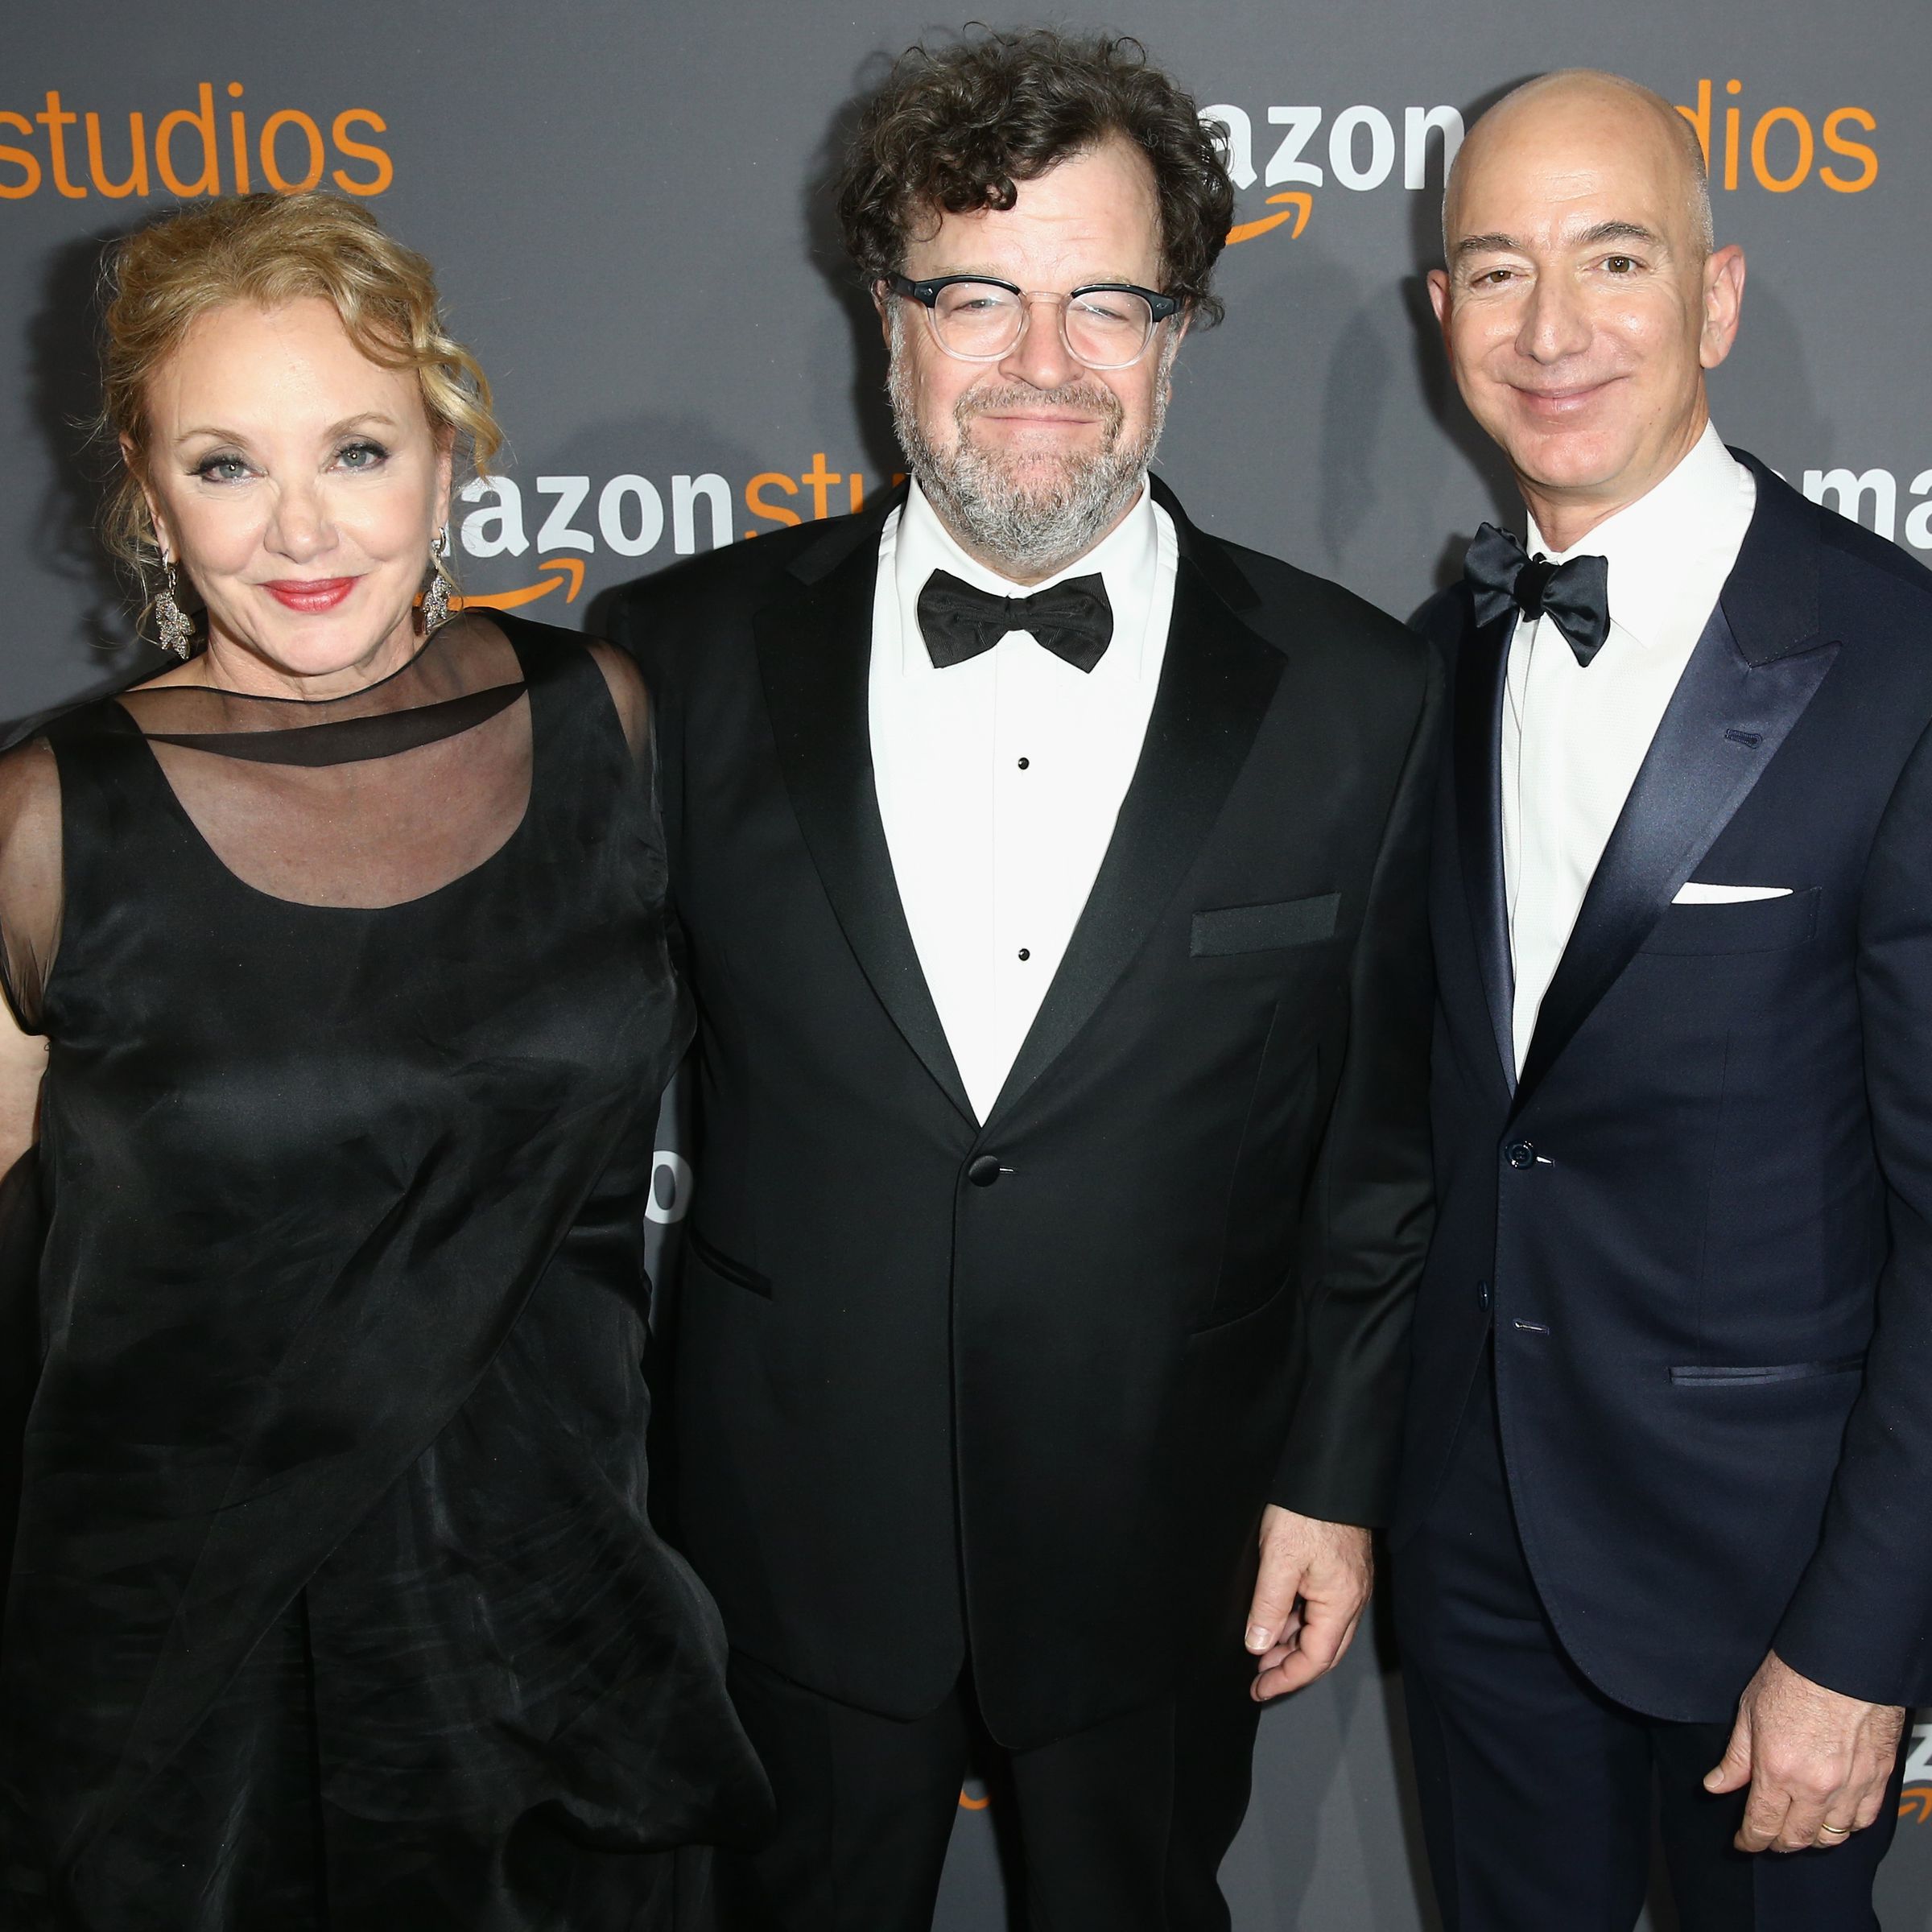 Amazon Studios Golden Globes Celebration